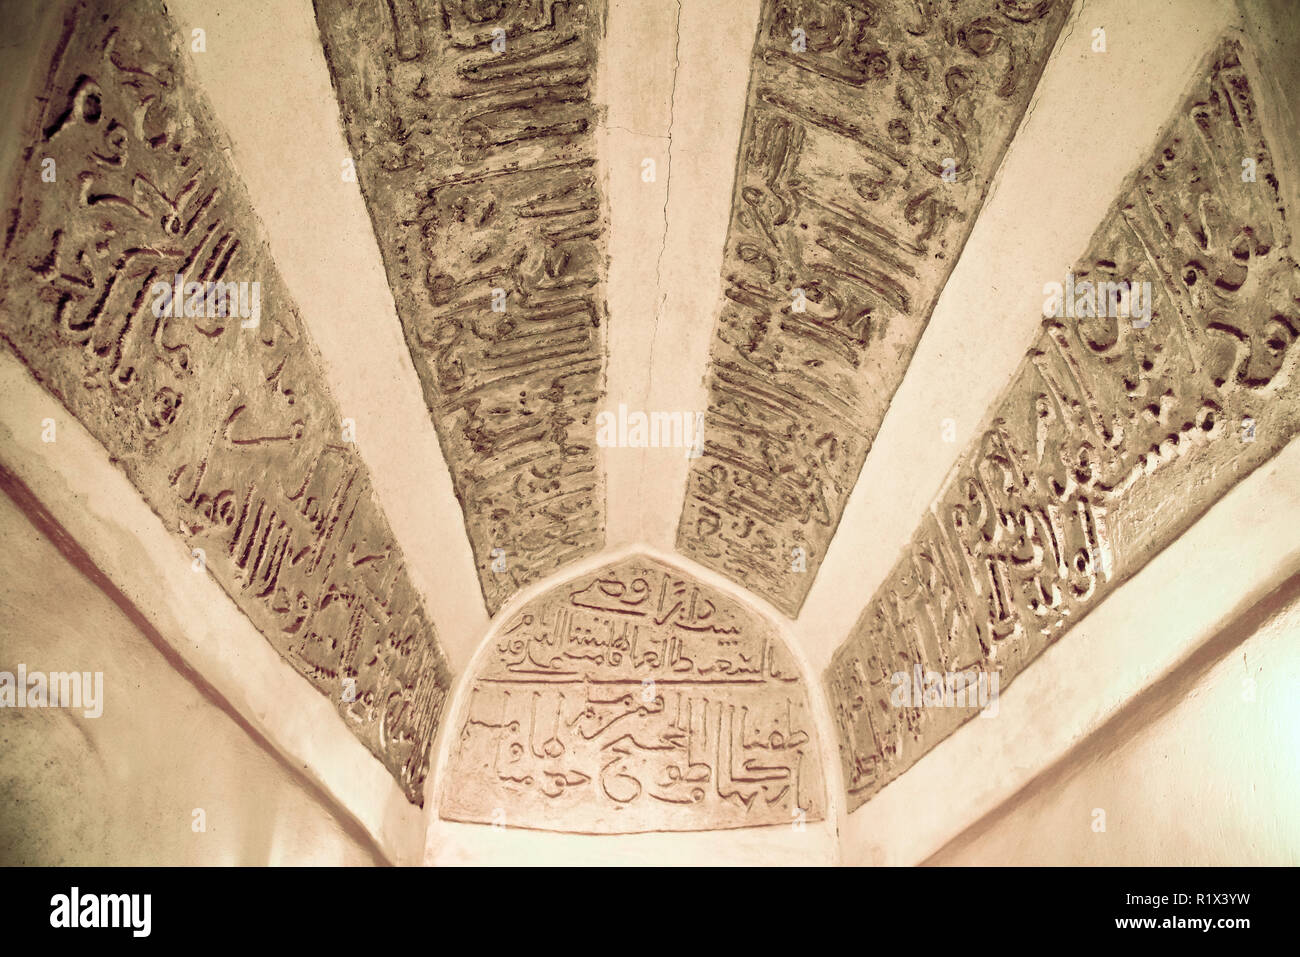 Inscriptions in staircase ceiling in Jabreen Castle, Nizwa, Oman. Stock Photo